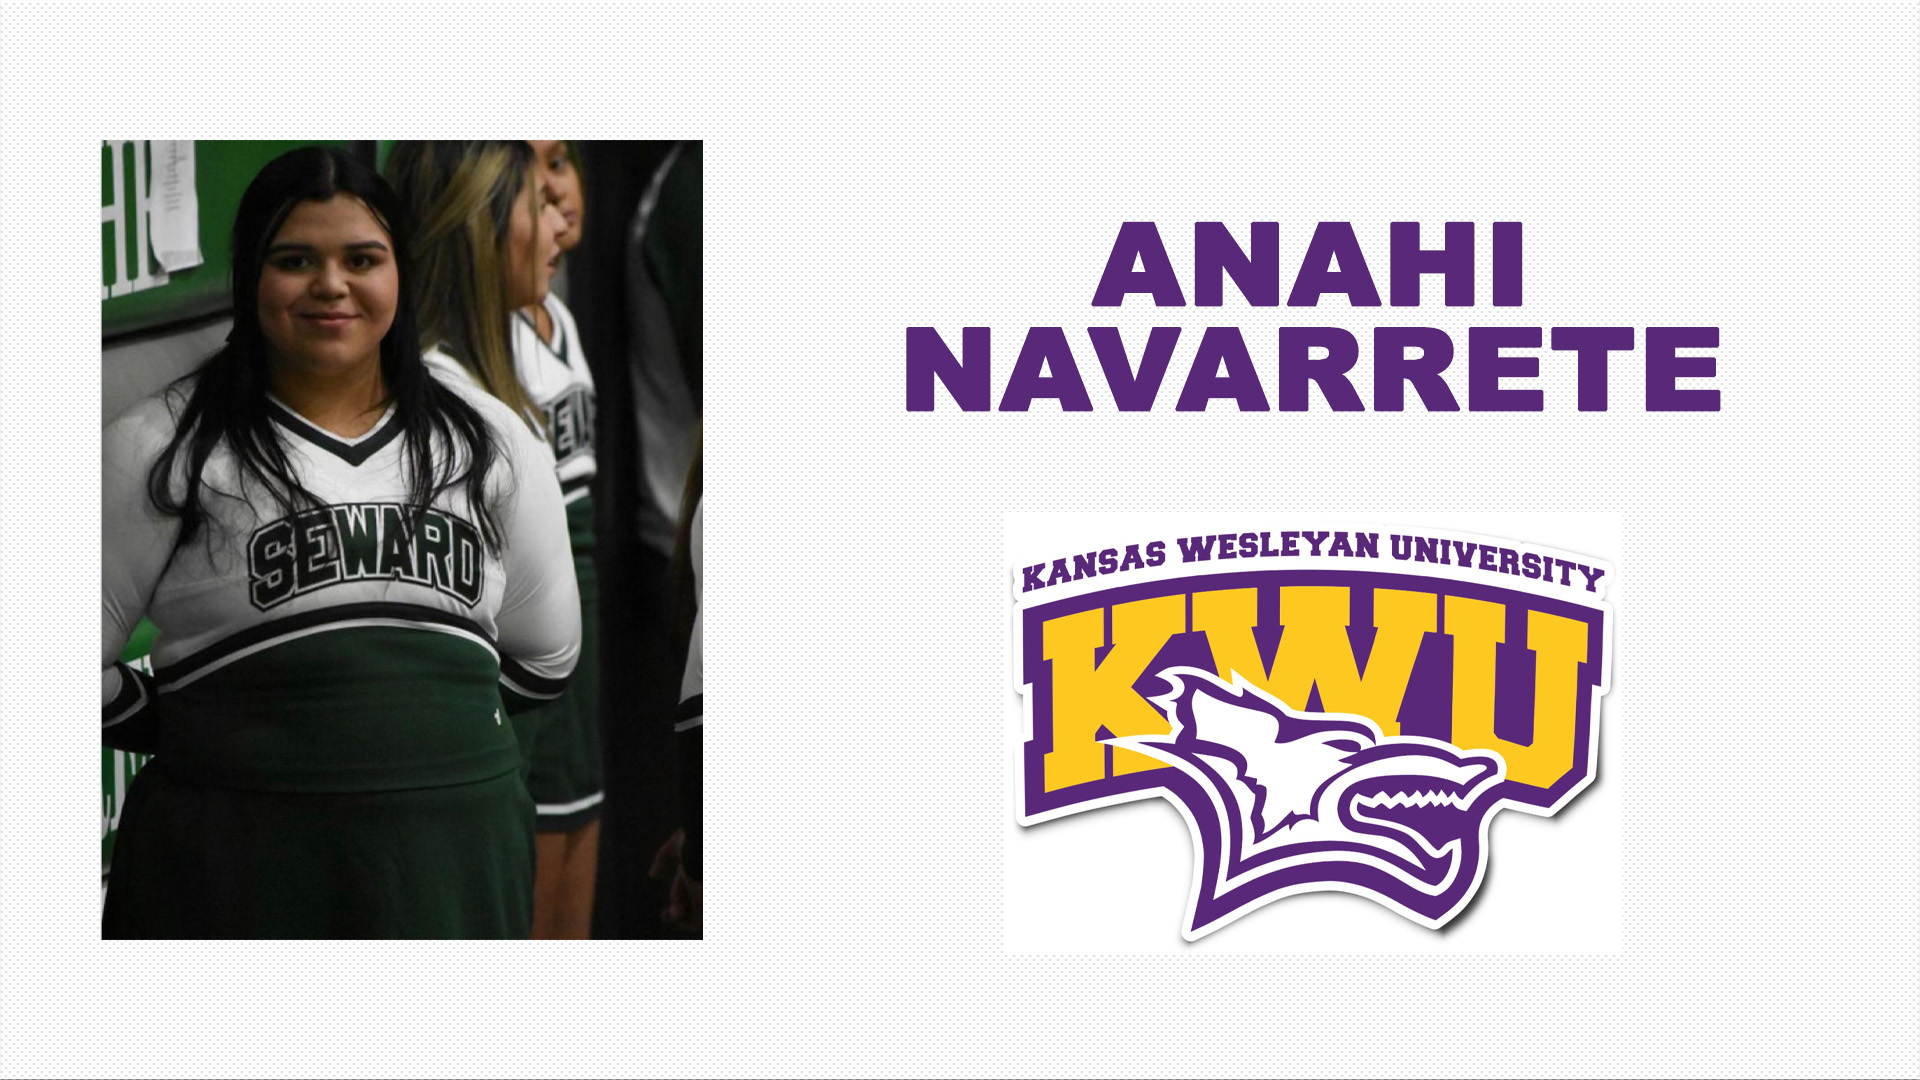 Anahi Navarrete signs with Kansas Wesleyan cheer team